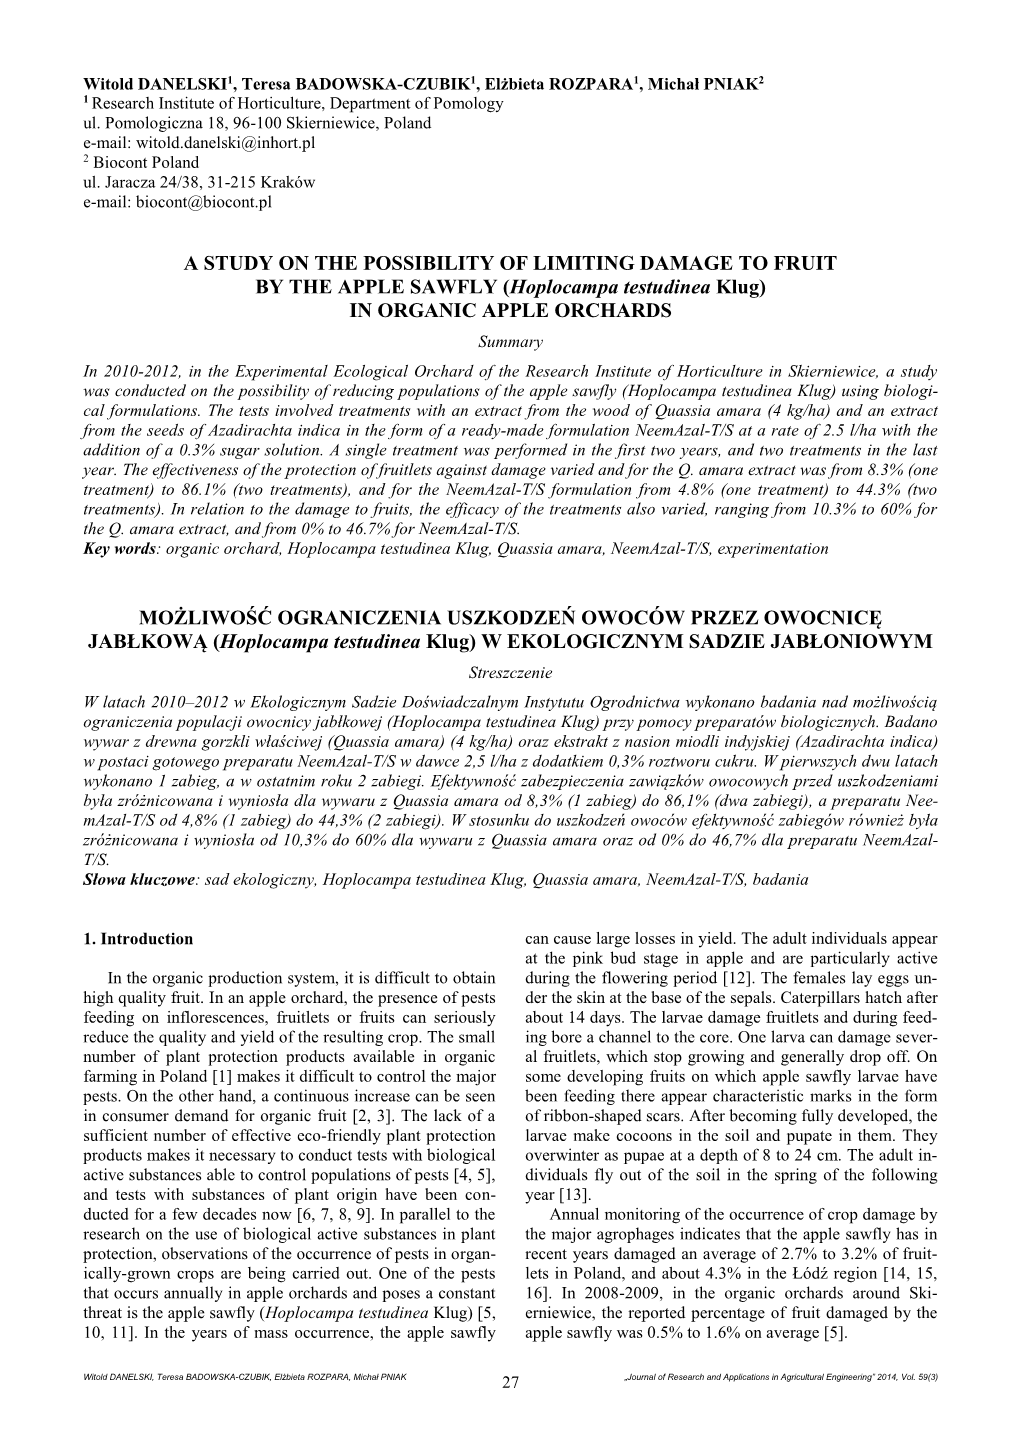 Witold DANELSKI, Teresa BADOWSKA-CZUBIK, Elżbieta ROZPARA, Michał PNIAK 27 „Journal of Research and Applications in Agricultural Engineering” 2014, Vol